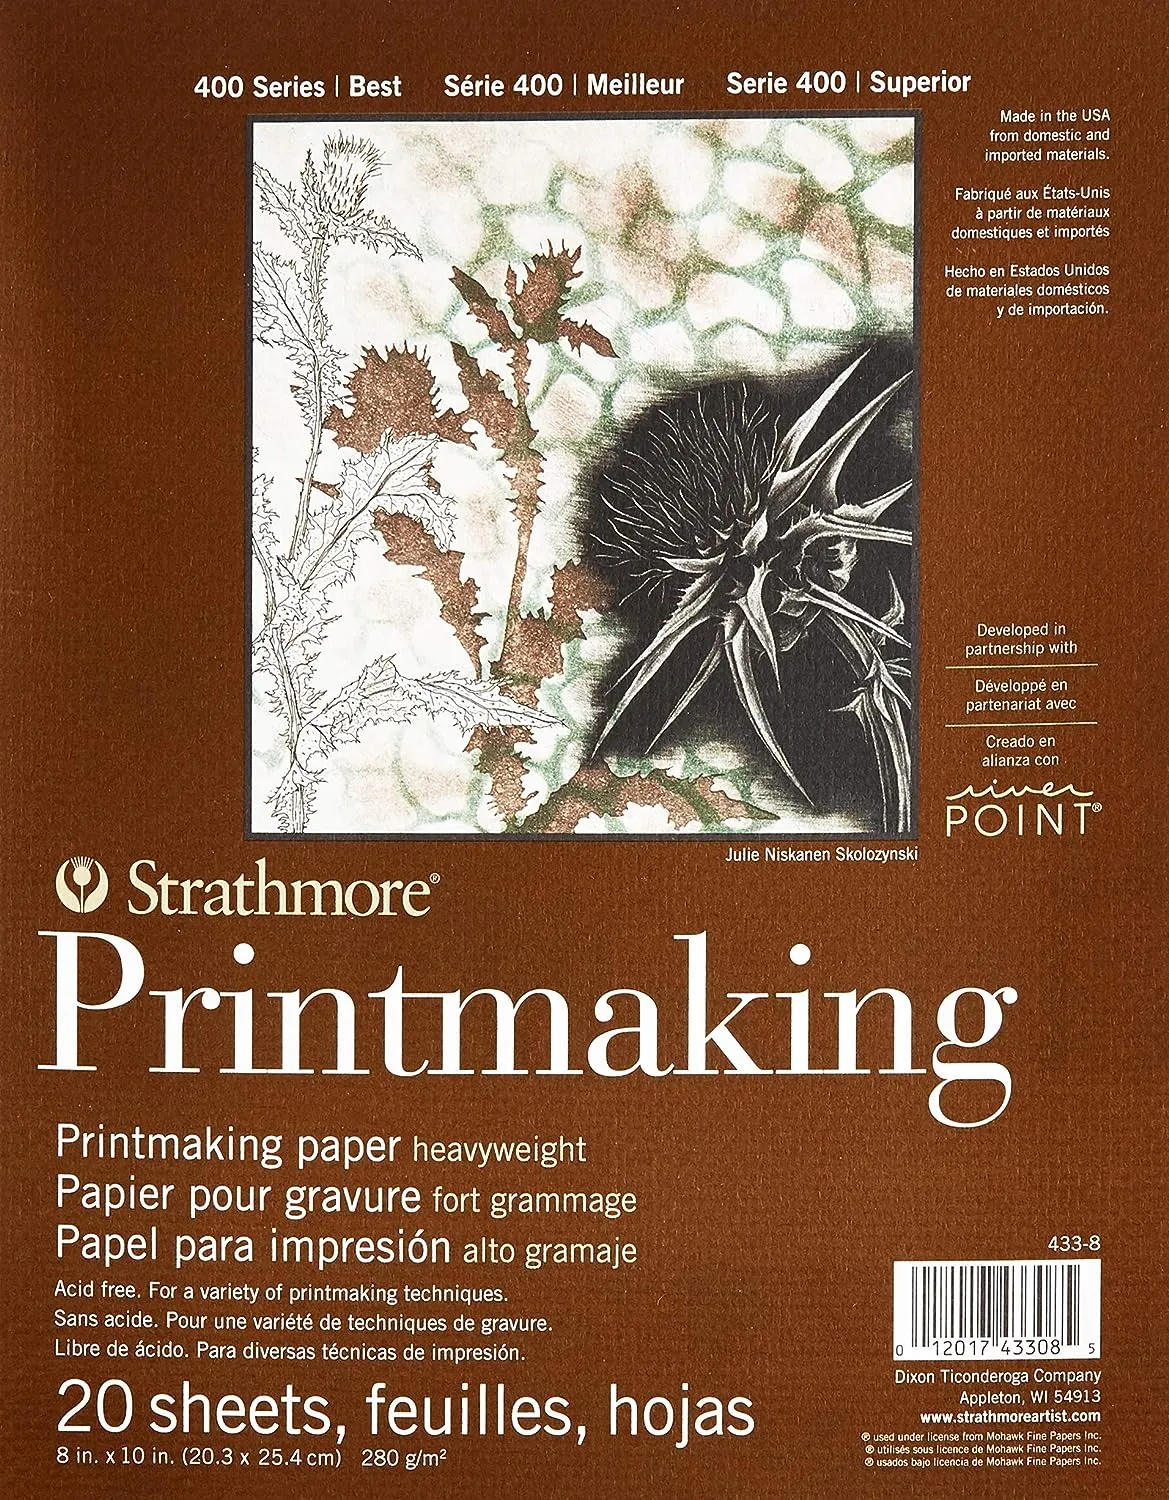 Pro-Art Strathmore printmaking paper